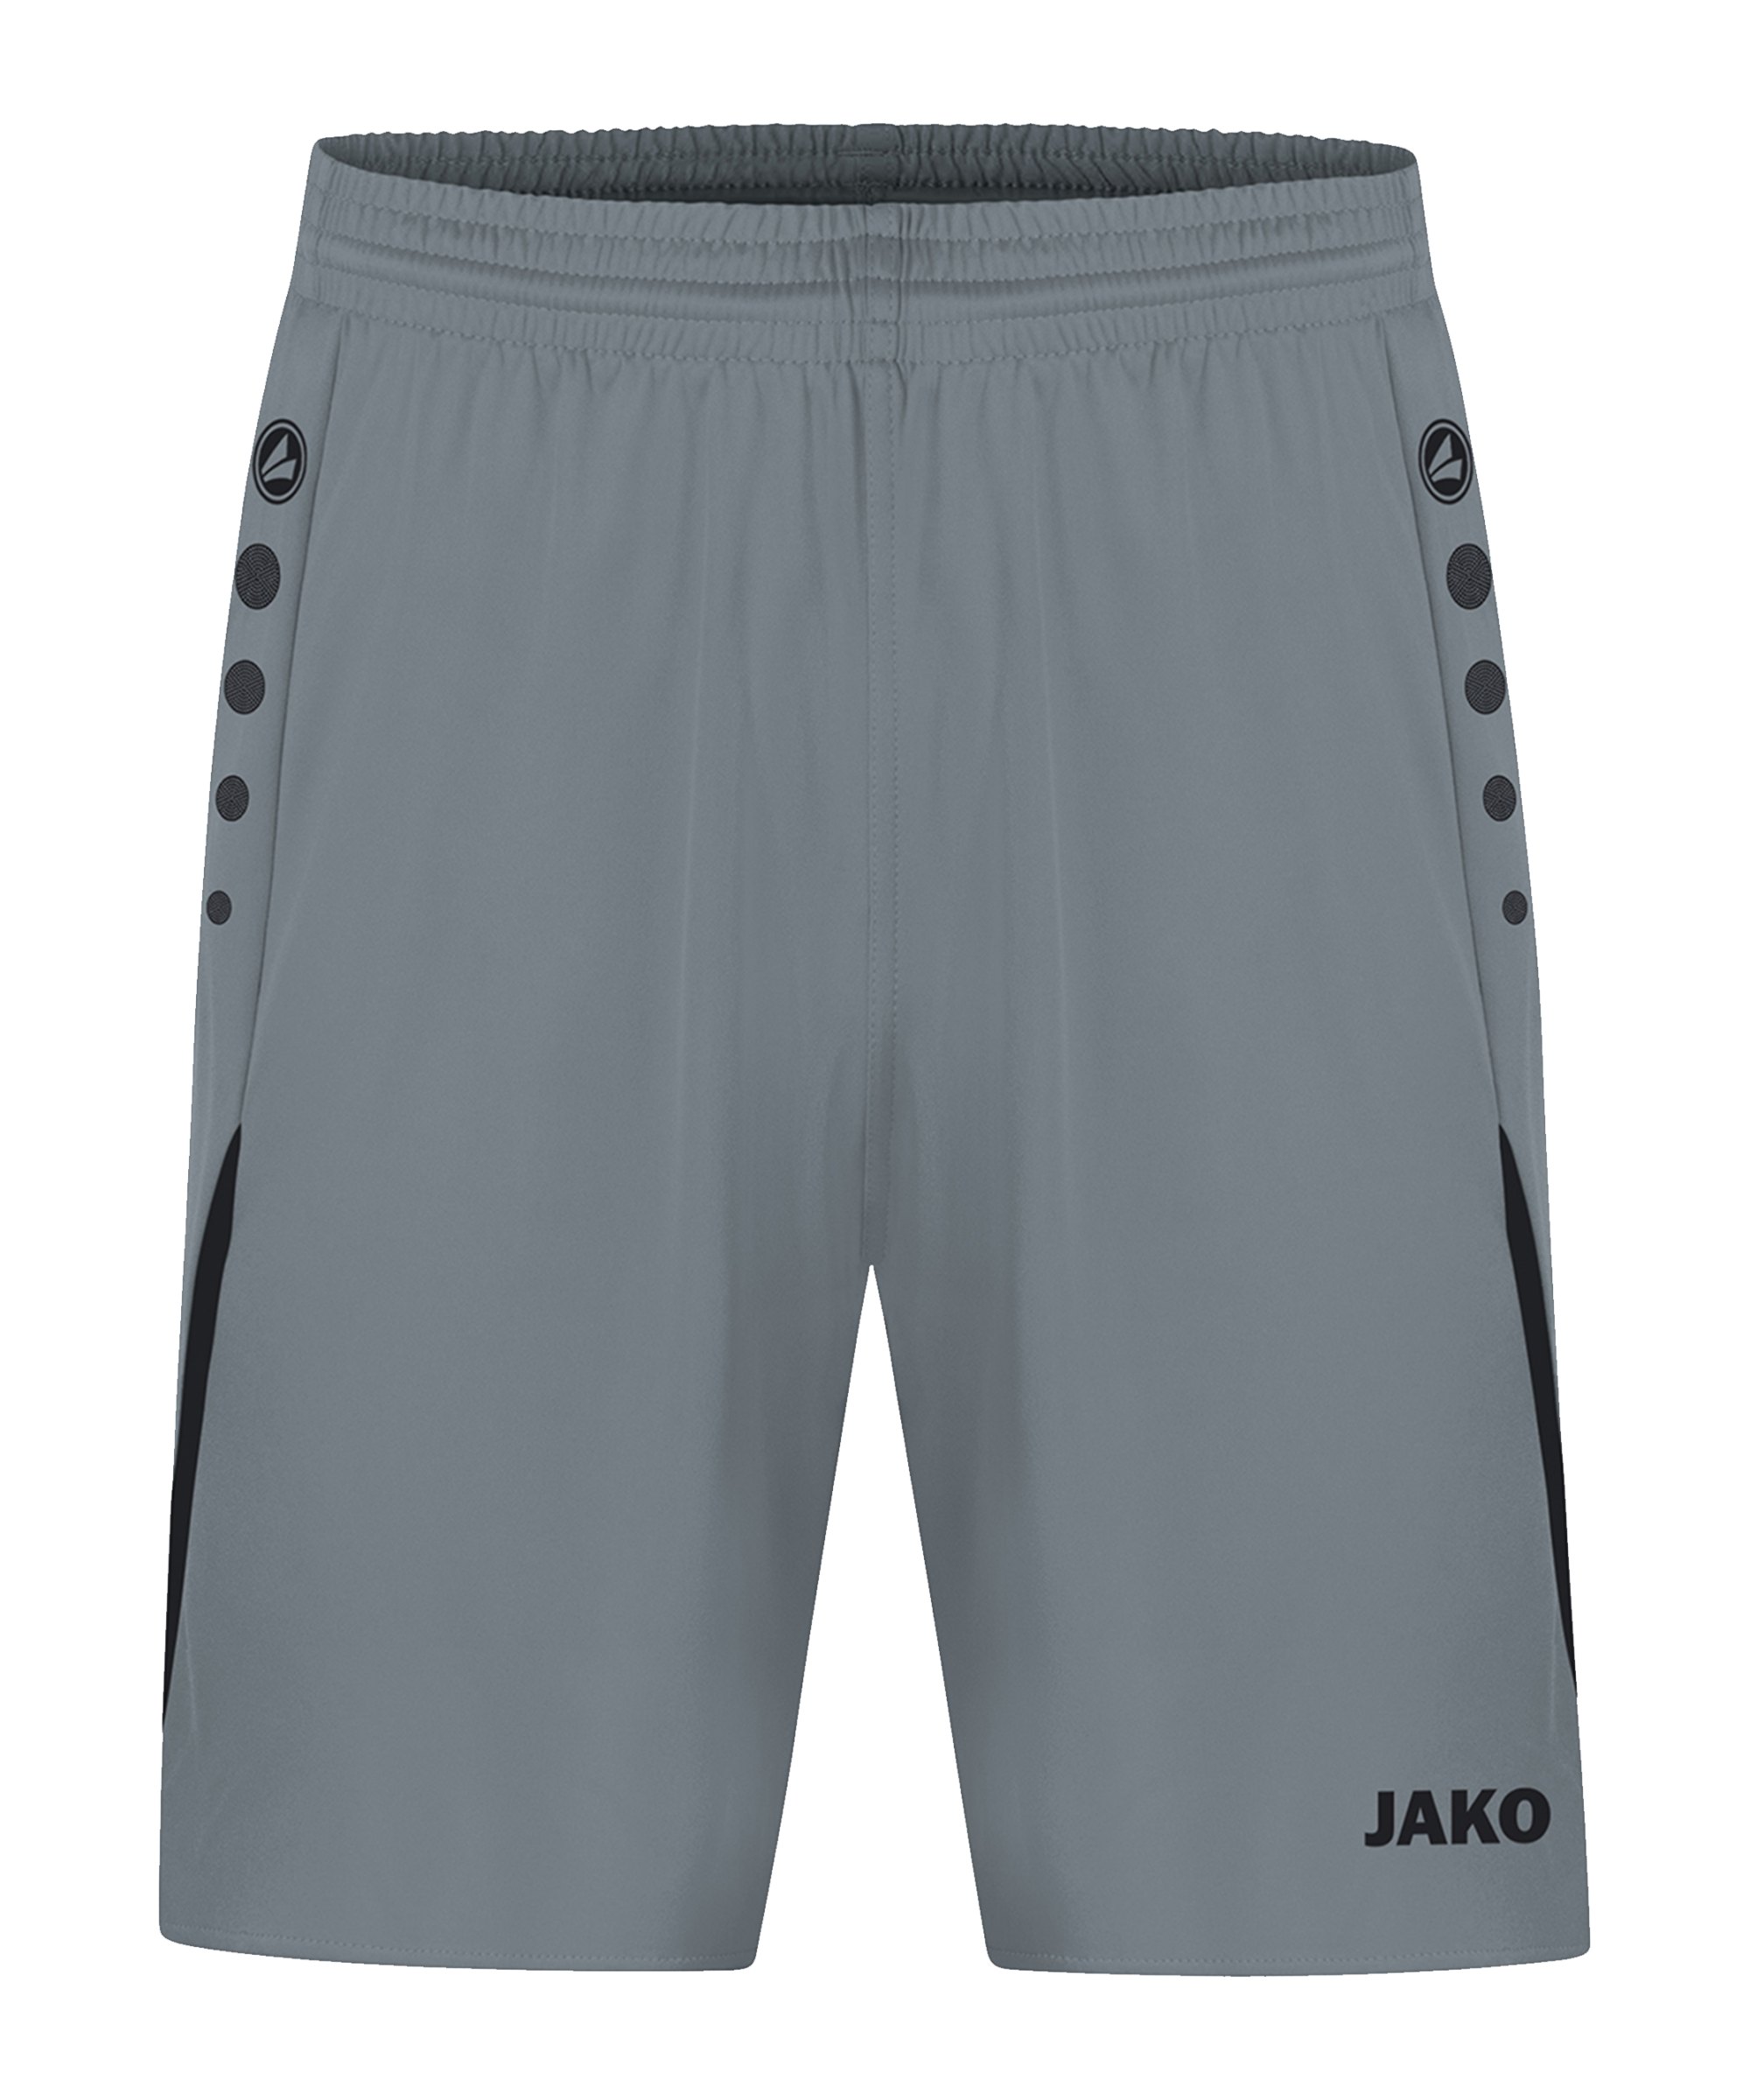 JAKO Challenge Short Grau Schwarz F841 - grau